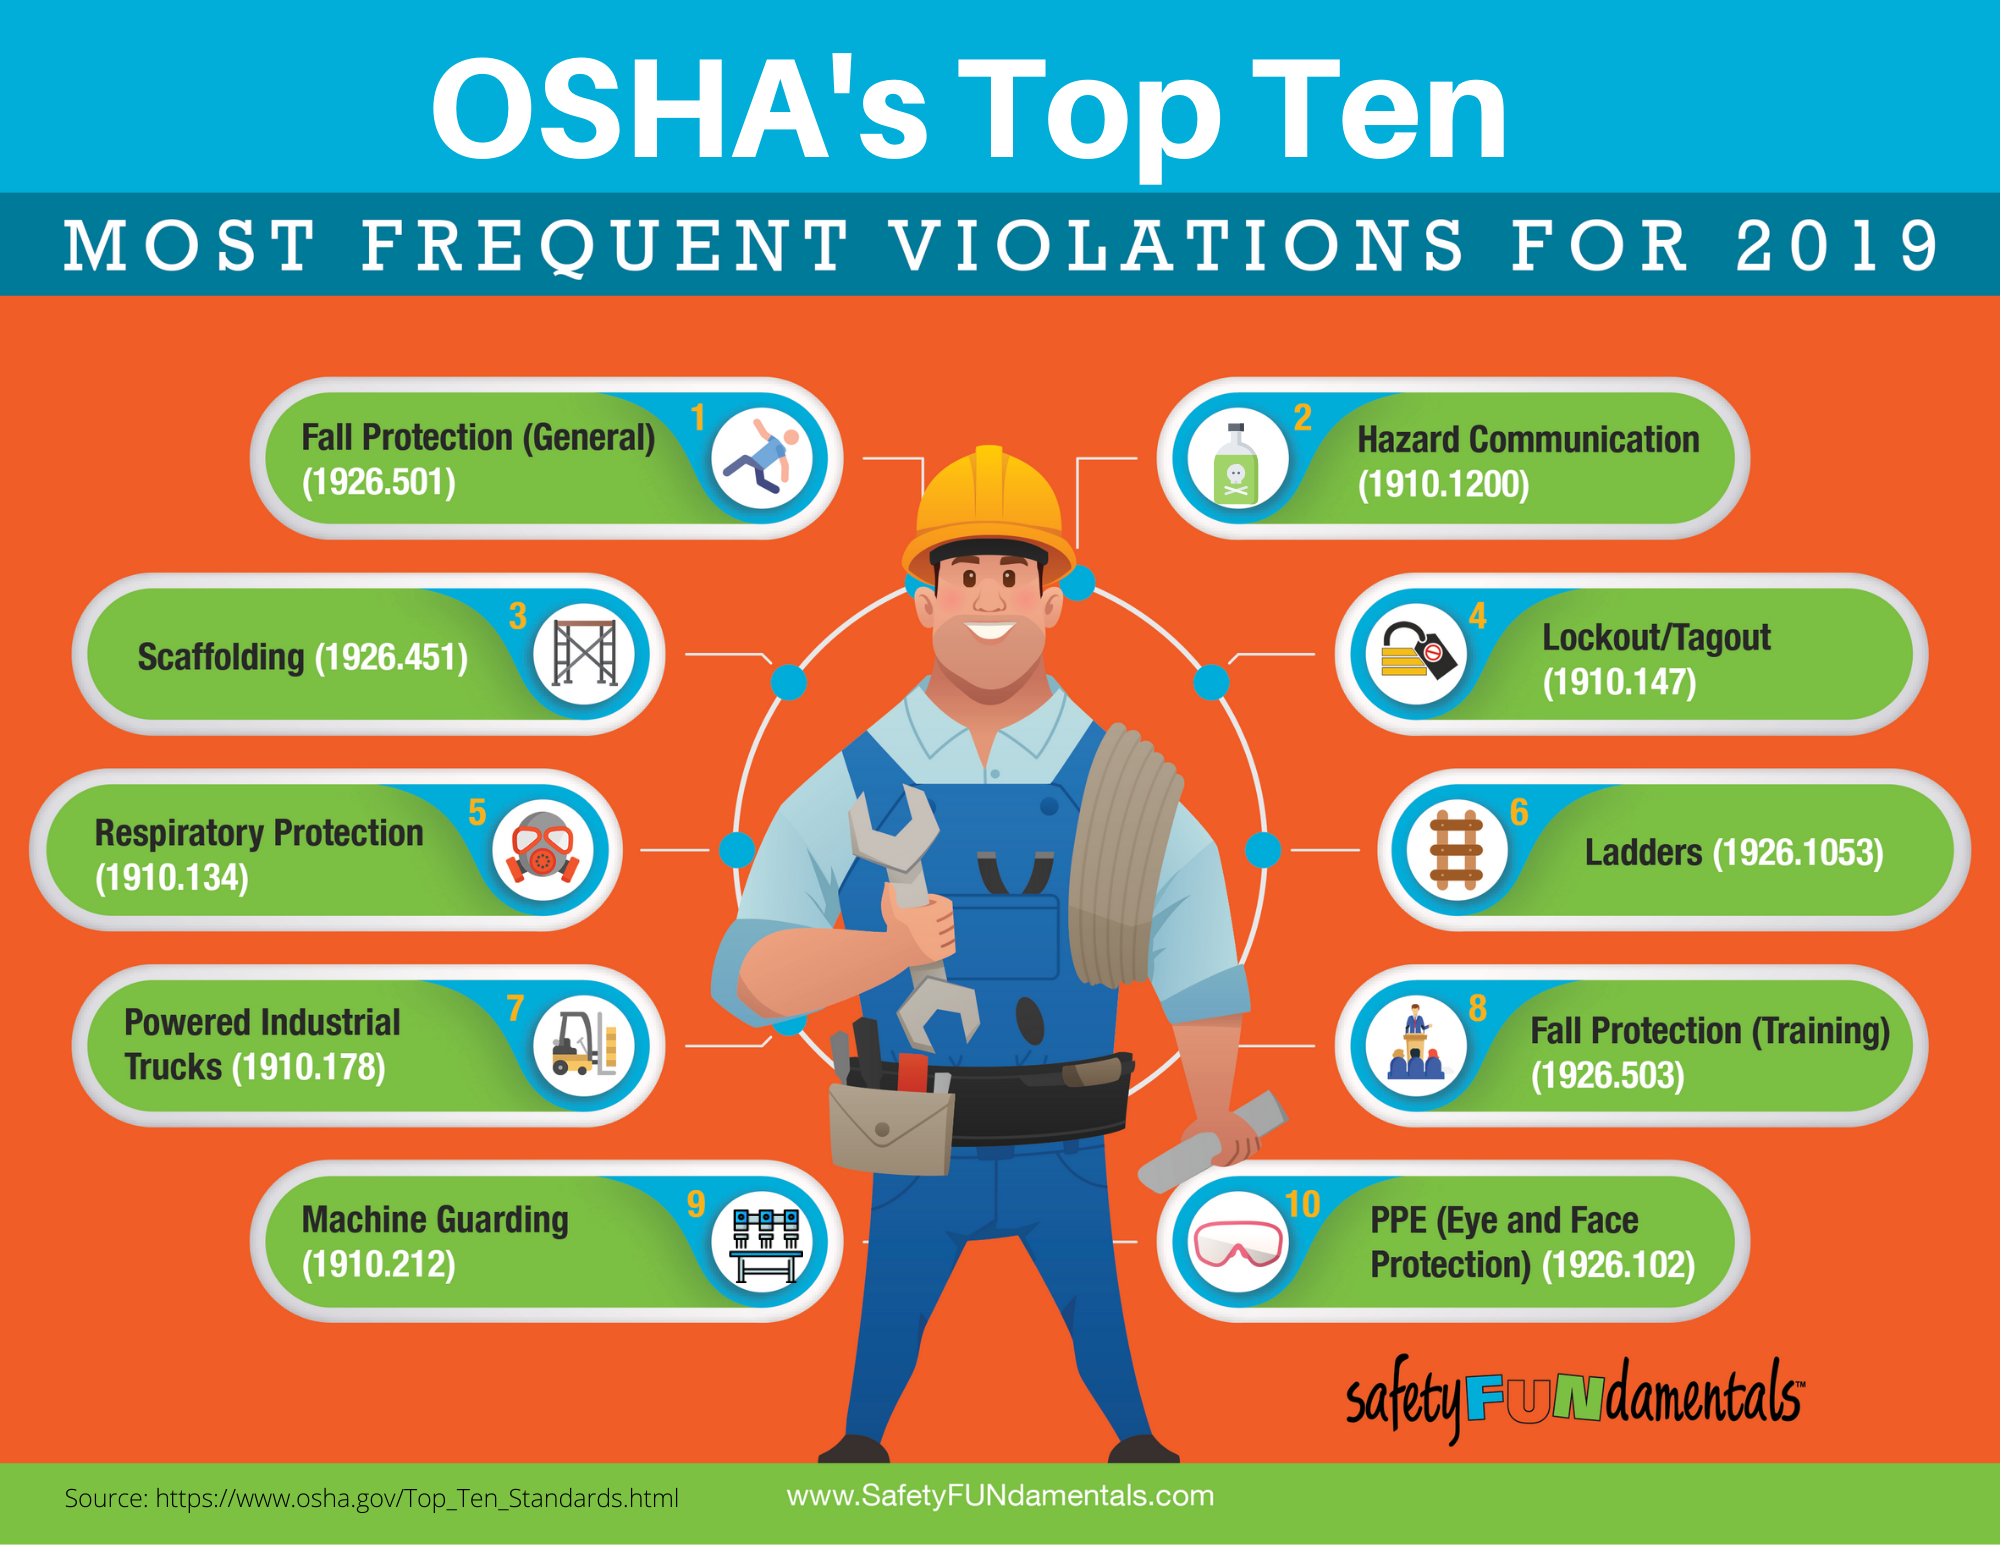 osha-s-latest-top-ten-safetyfundamentals